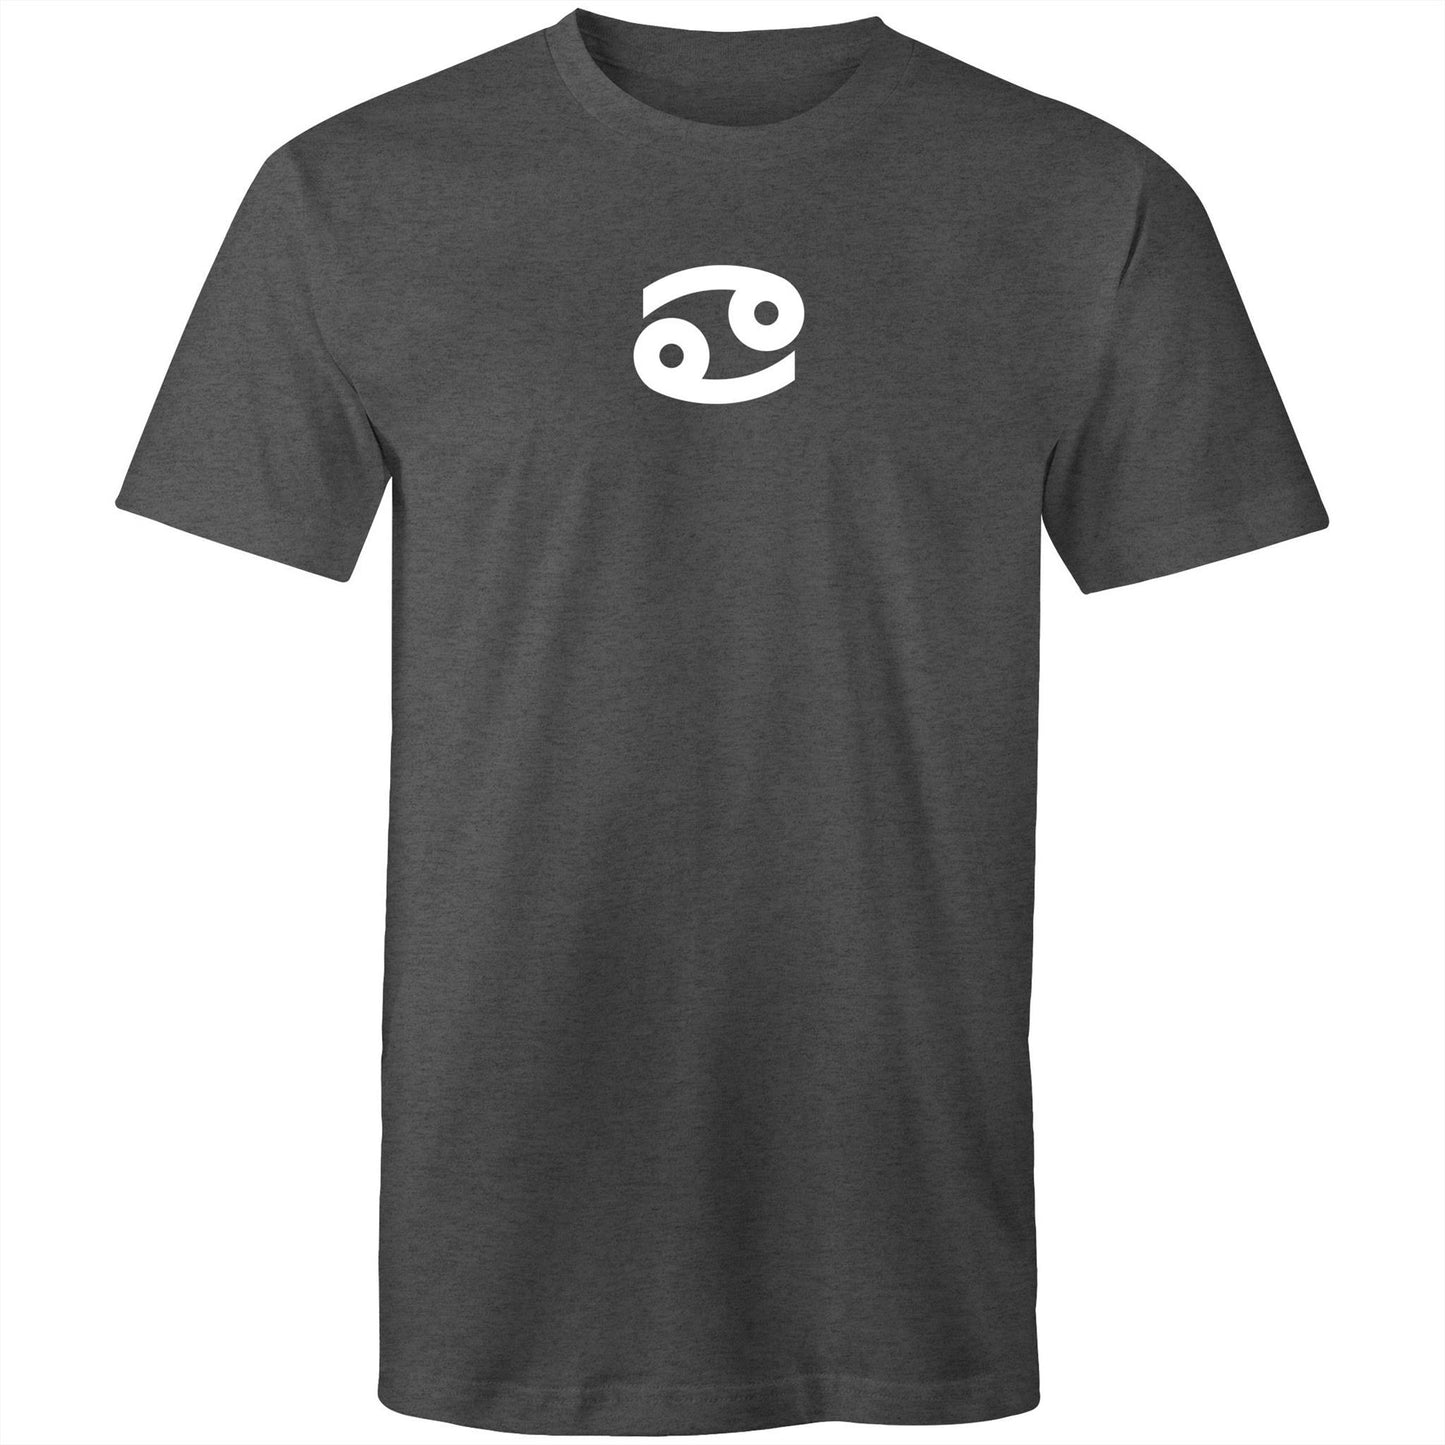 Cancer T Shirts for Men (Unisex)